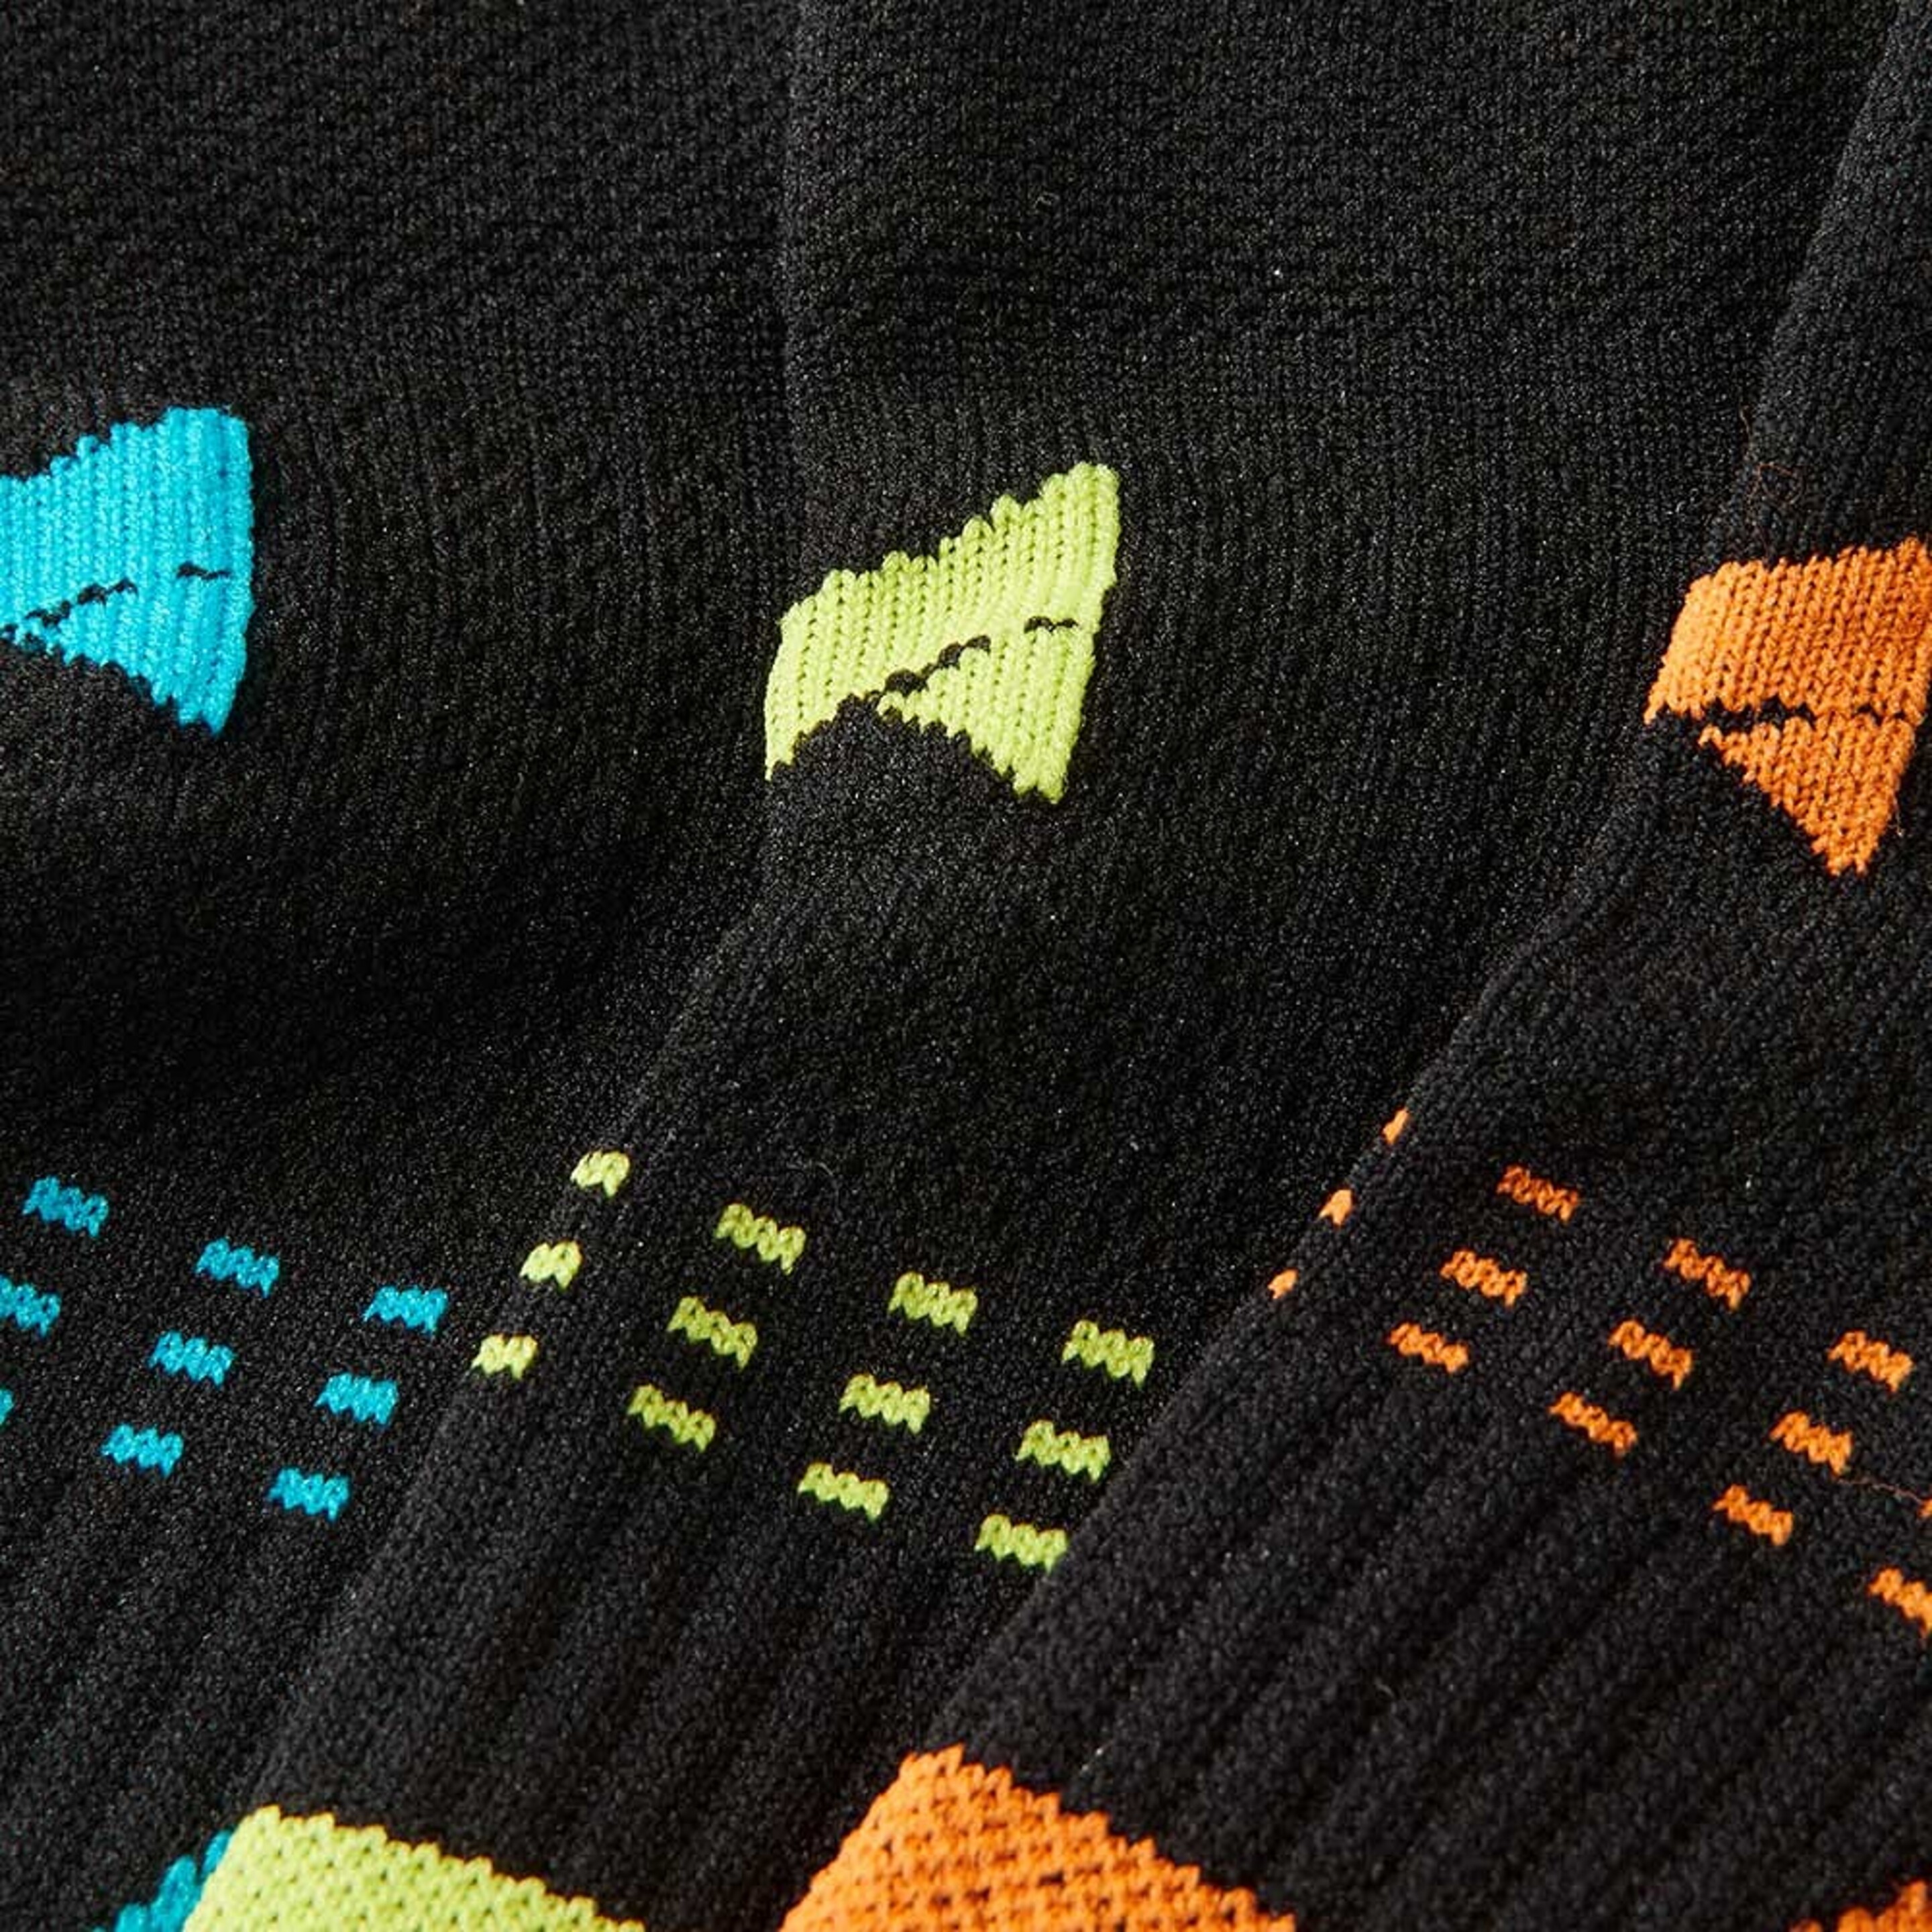 Paquete 3 Pares Calcetines  Xtreme Sockswear Fitness - Negro - Ideal Para Deporte En El Gimnasio  MKP